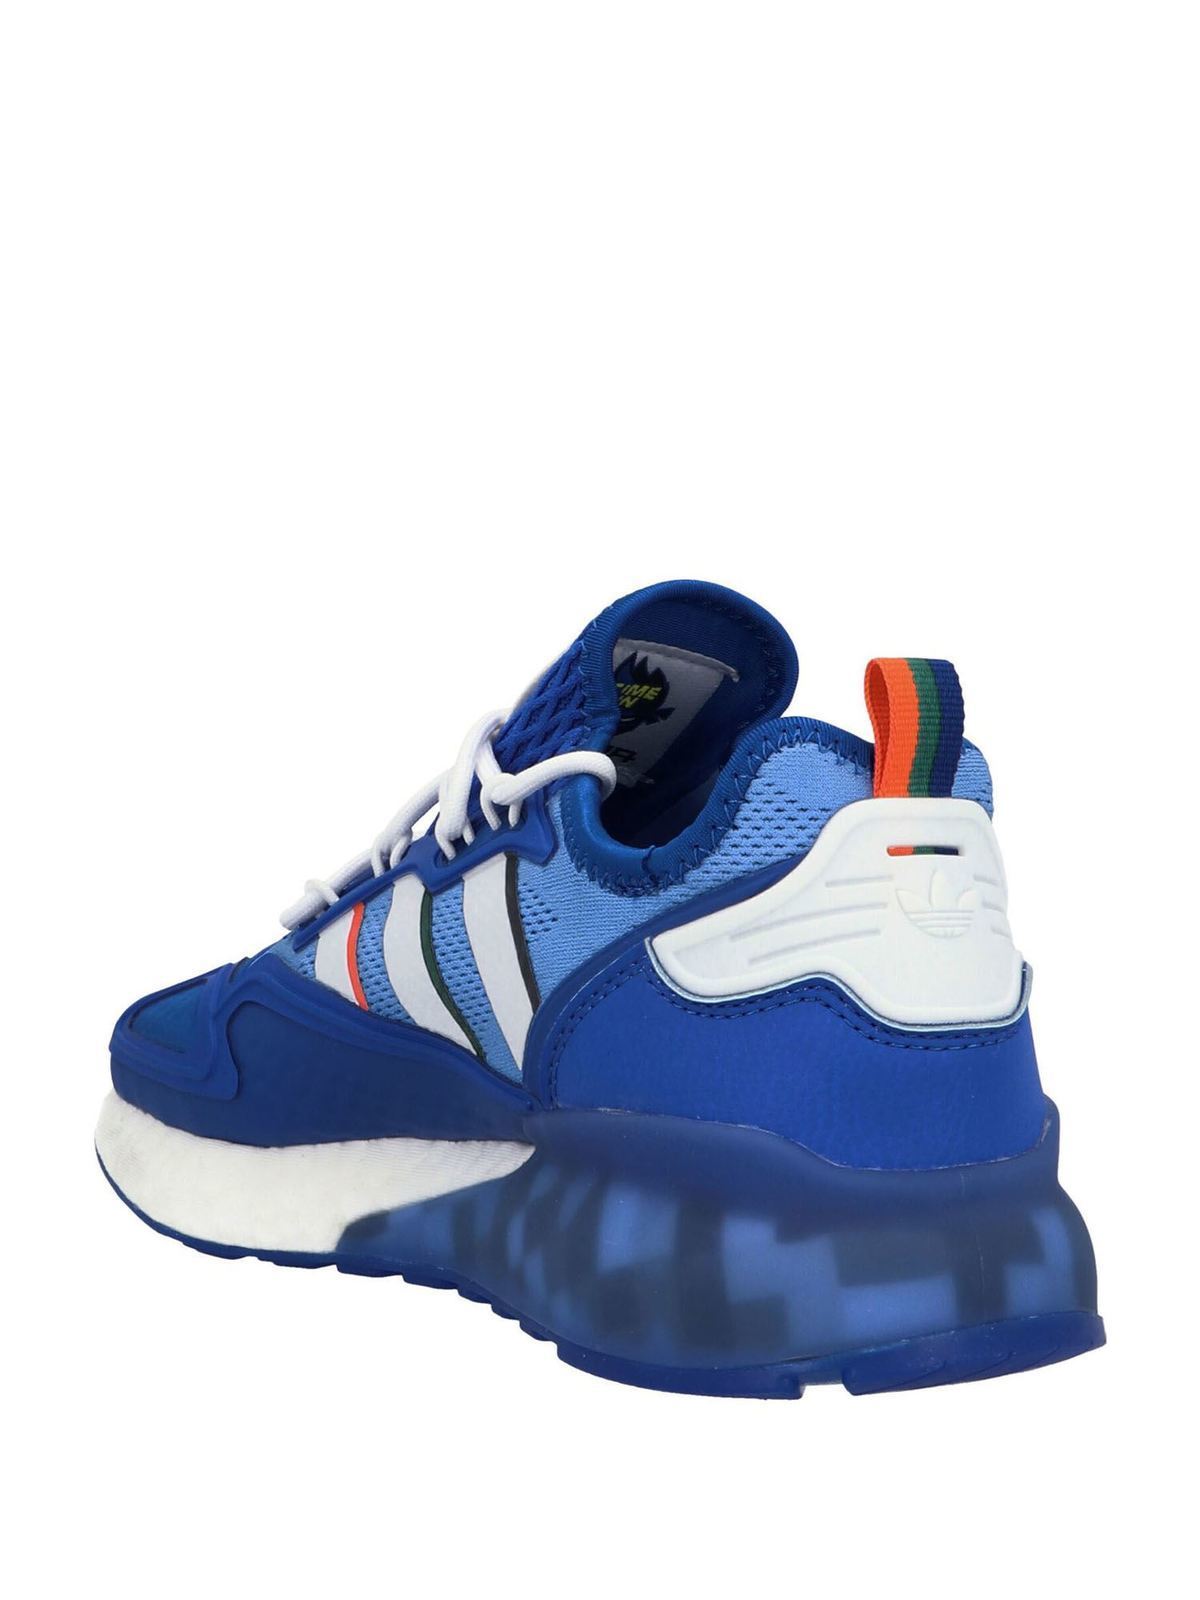 Trainers Adidas Originals - Ninja ZX Boost sneakers in blue FZ1883